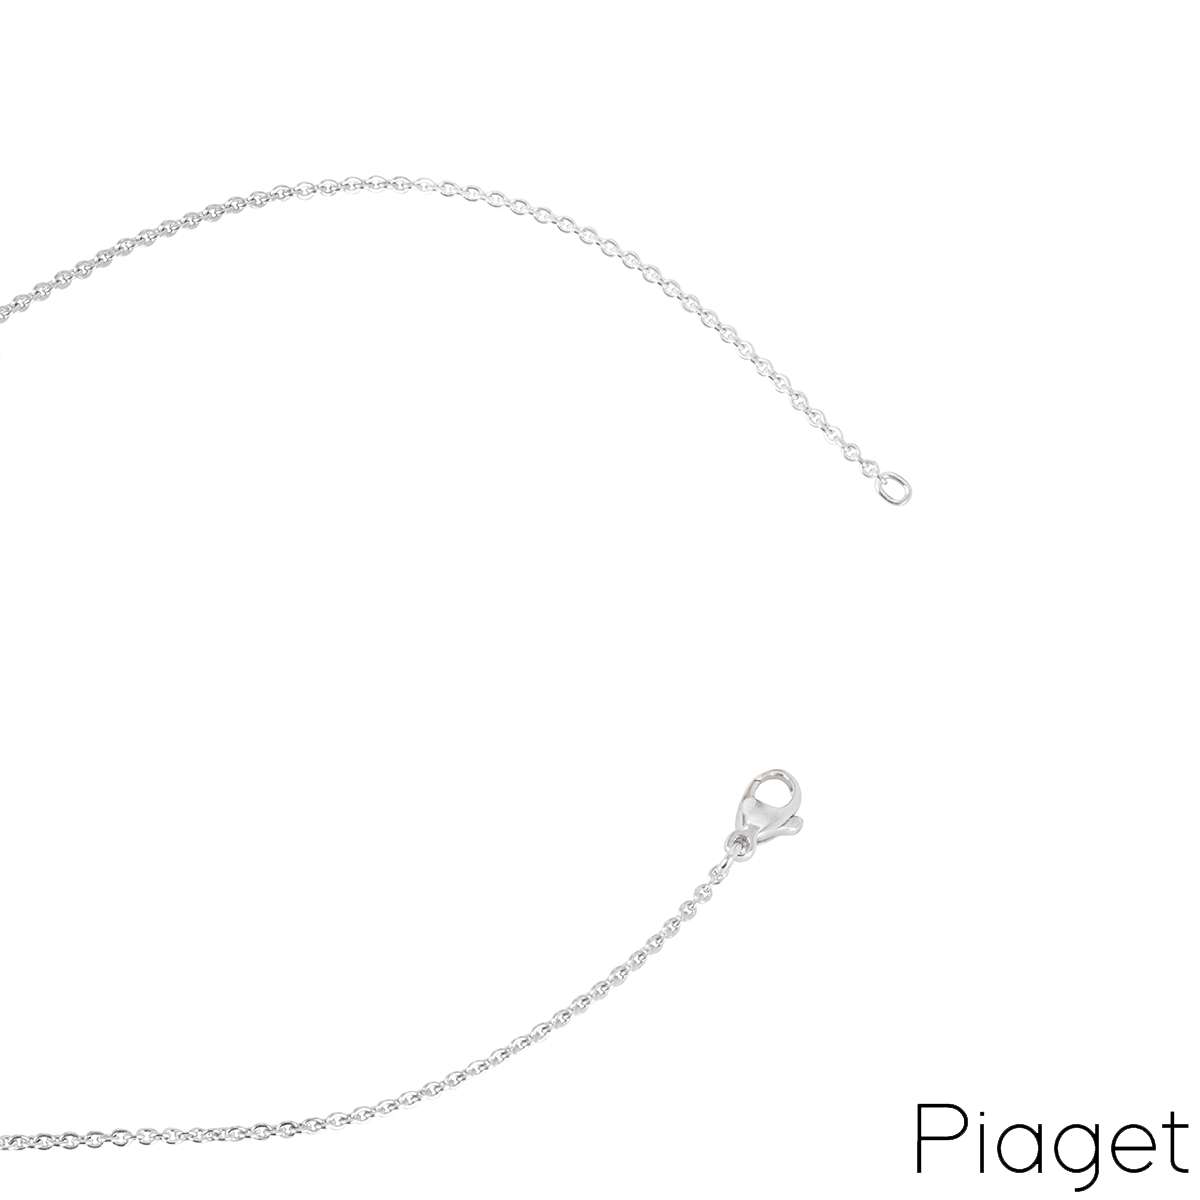 Piaget White Gold Diamond Leaf Pendant 3.15ct